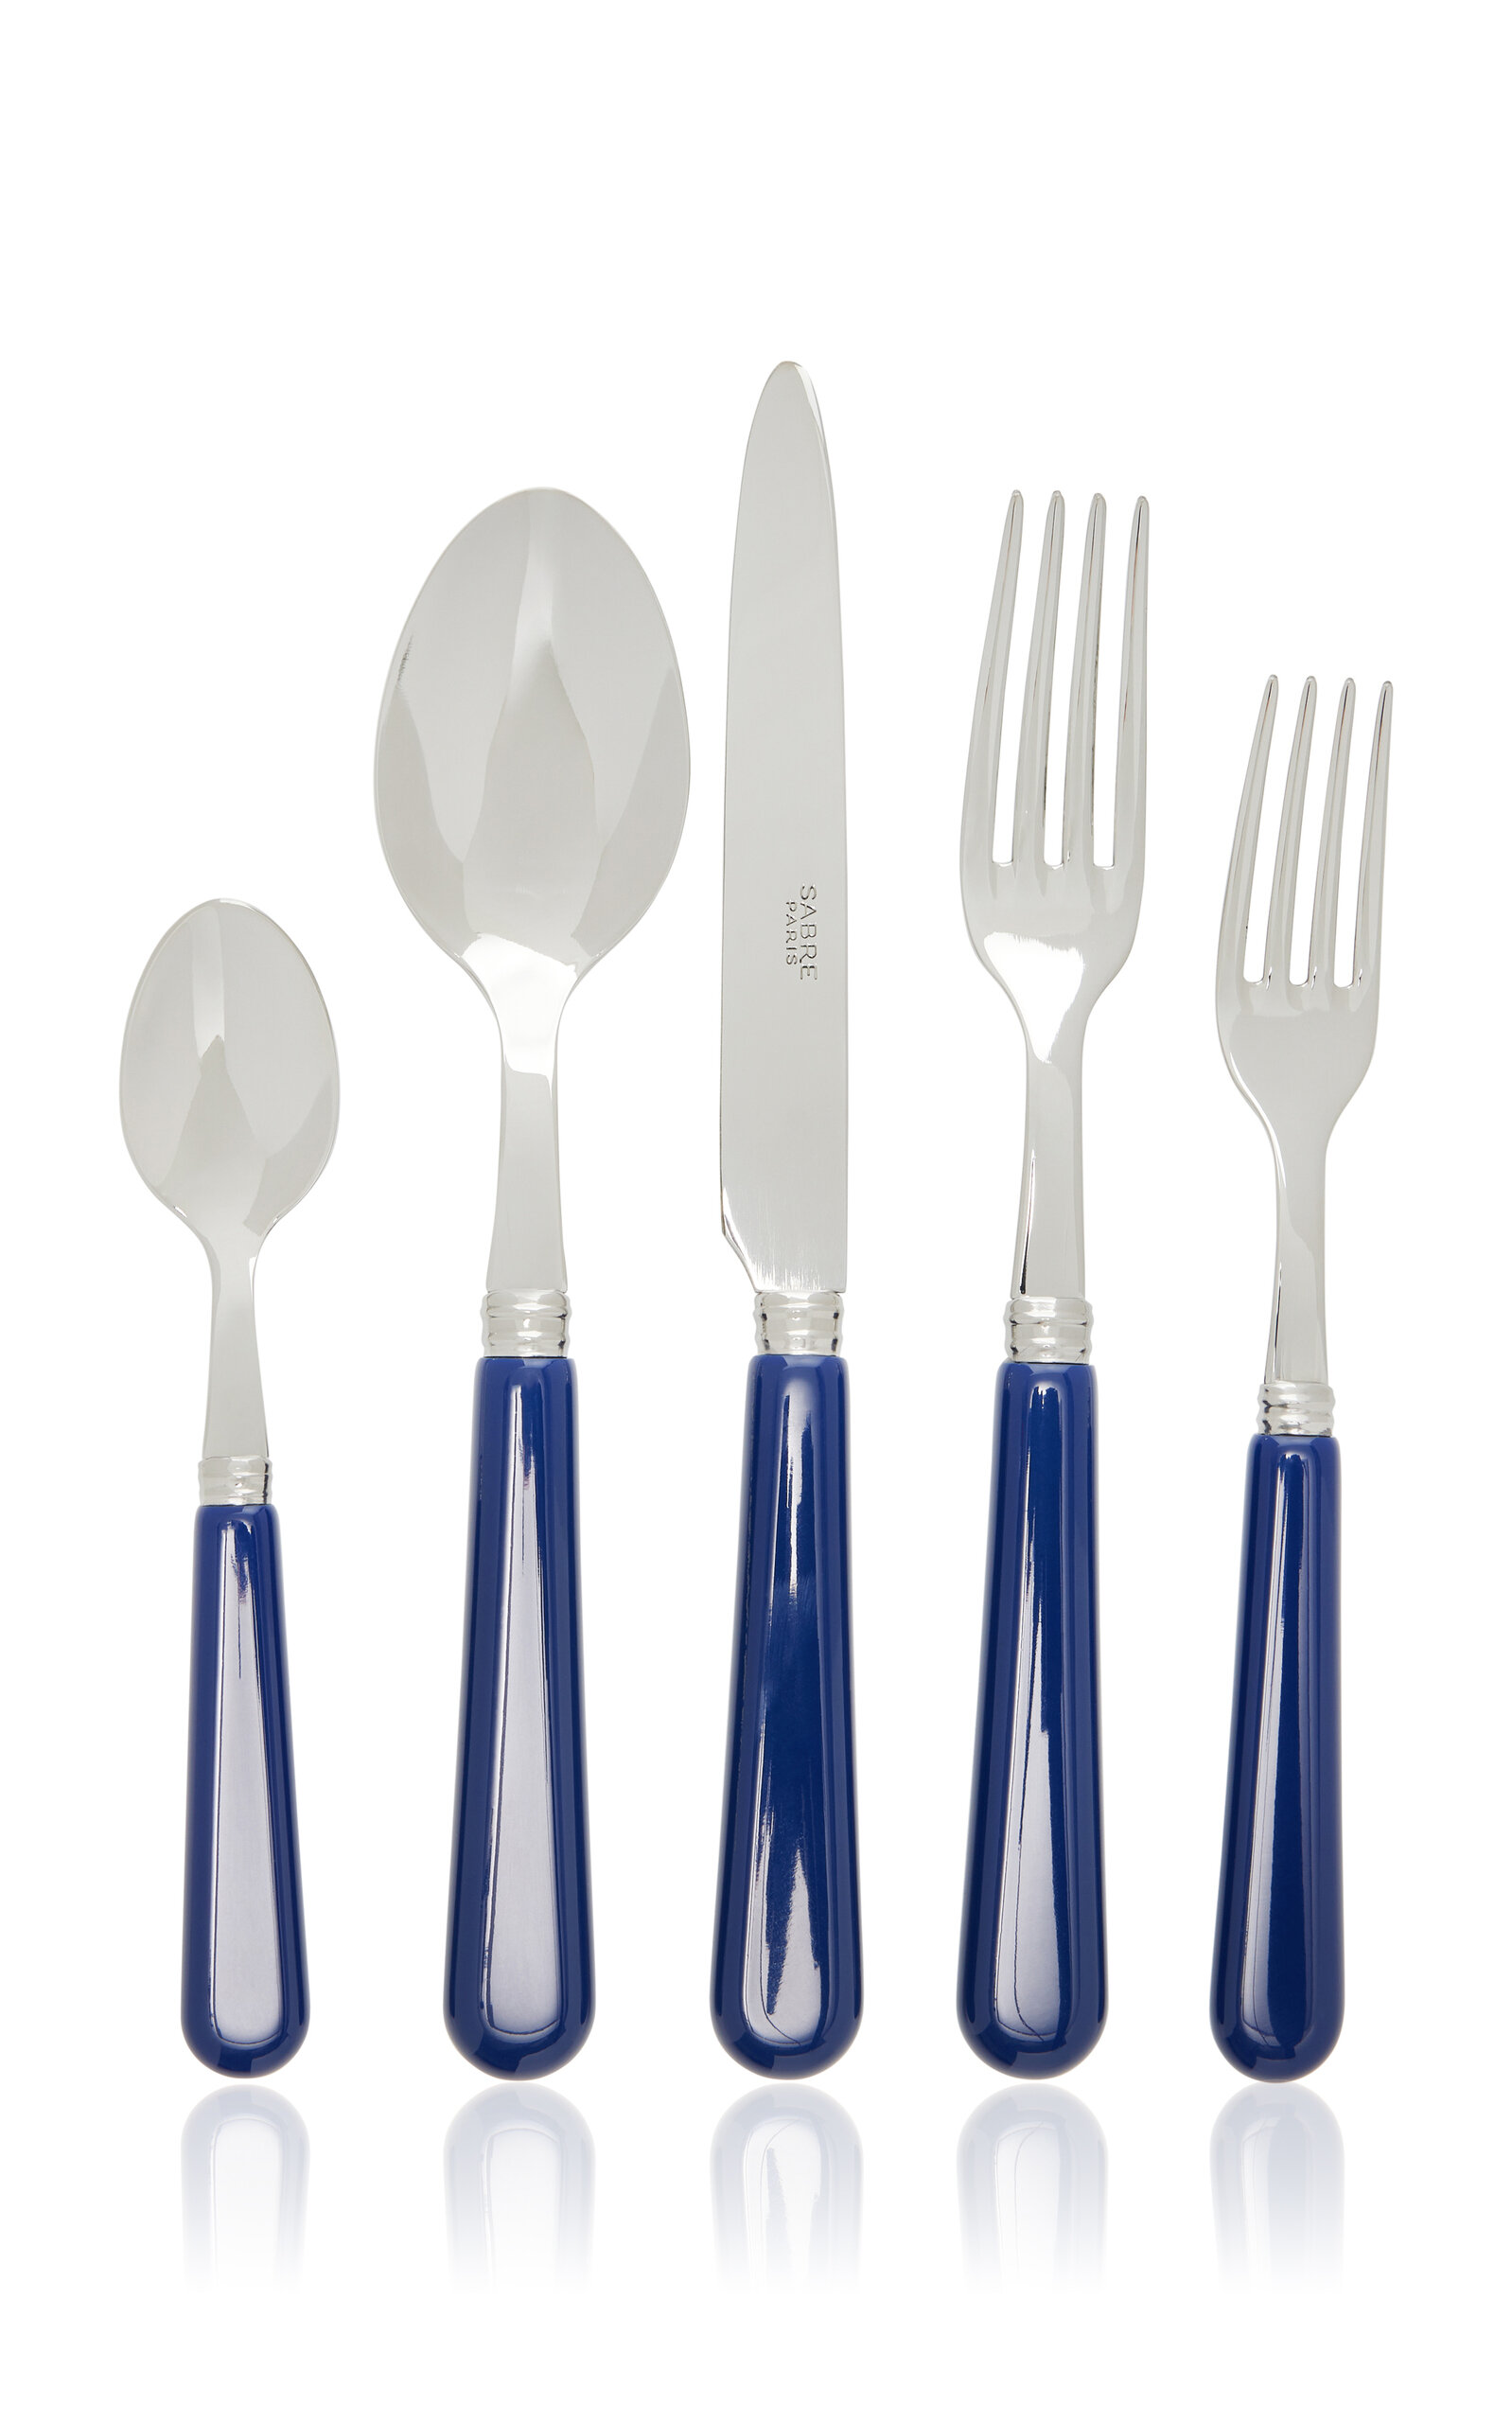 Sabre Five-piece Pop Stainless Steel Silverware Set In Blue